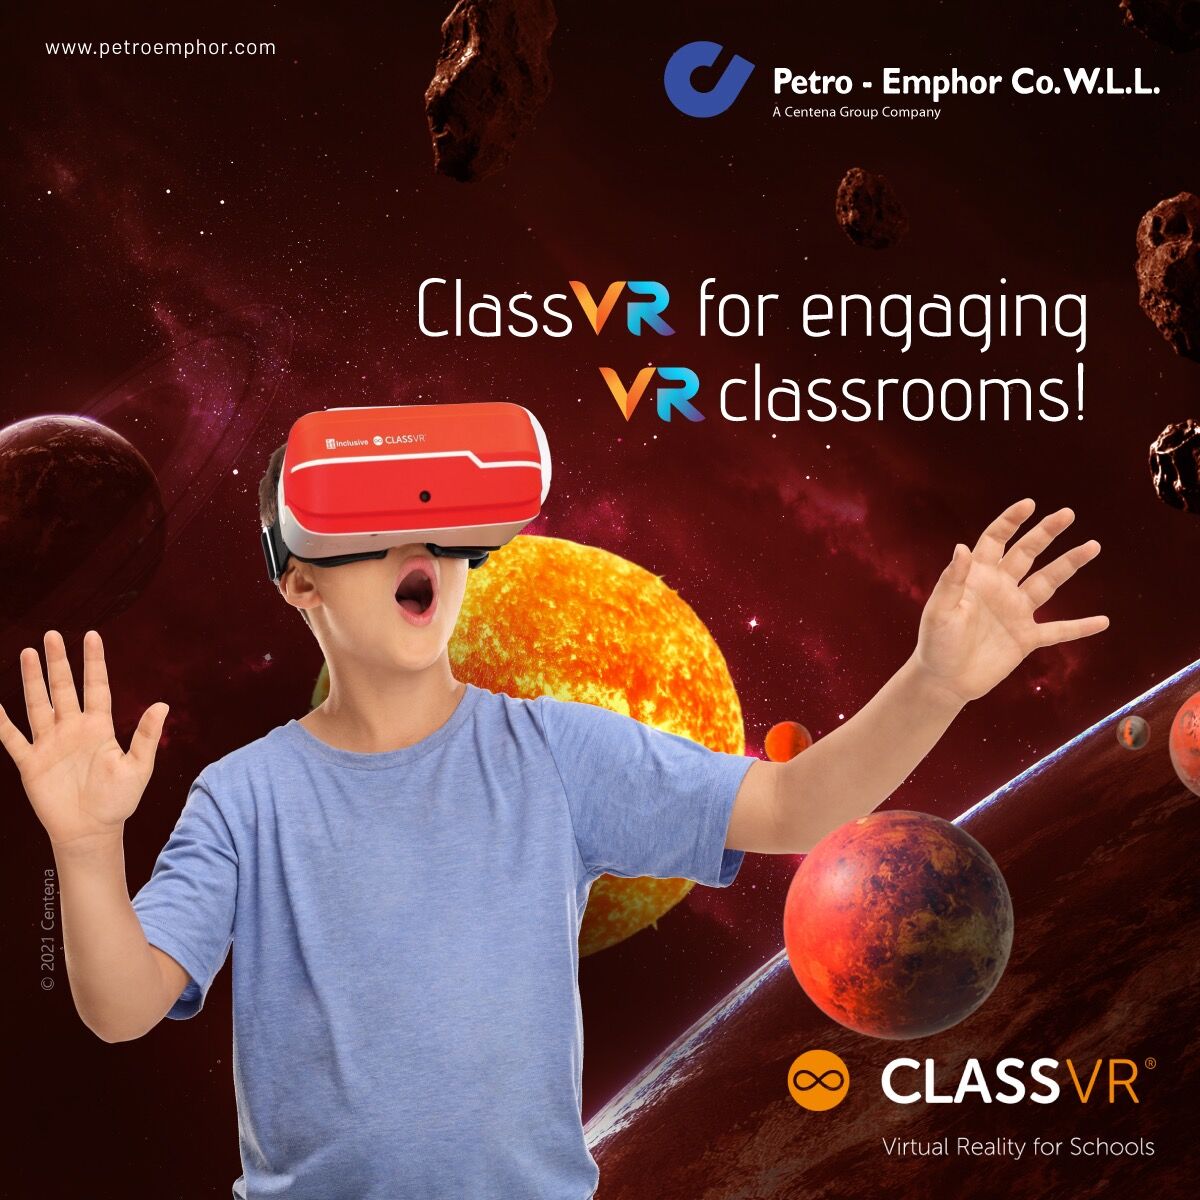 Class VR for the engaging VR classrooms!

#virtualreality #agumentedreality #education #learning #immersivelearning #newplatform #augmentedreality #training #classroom #experience #edutech #studentfriendly #technology #innovation #qatareducation #atlabme #centenagroup #qatar